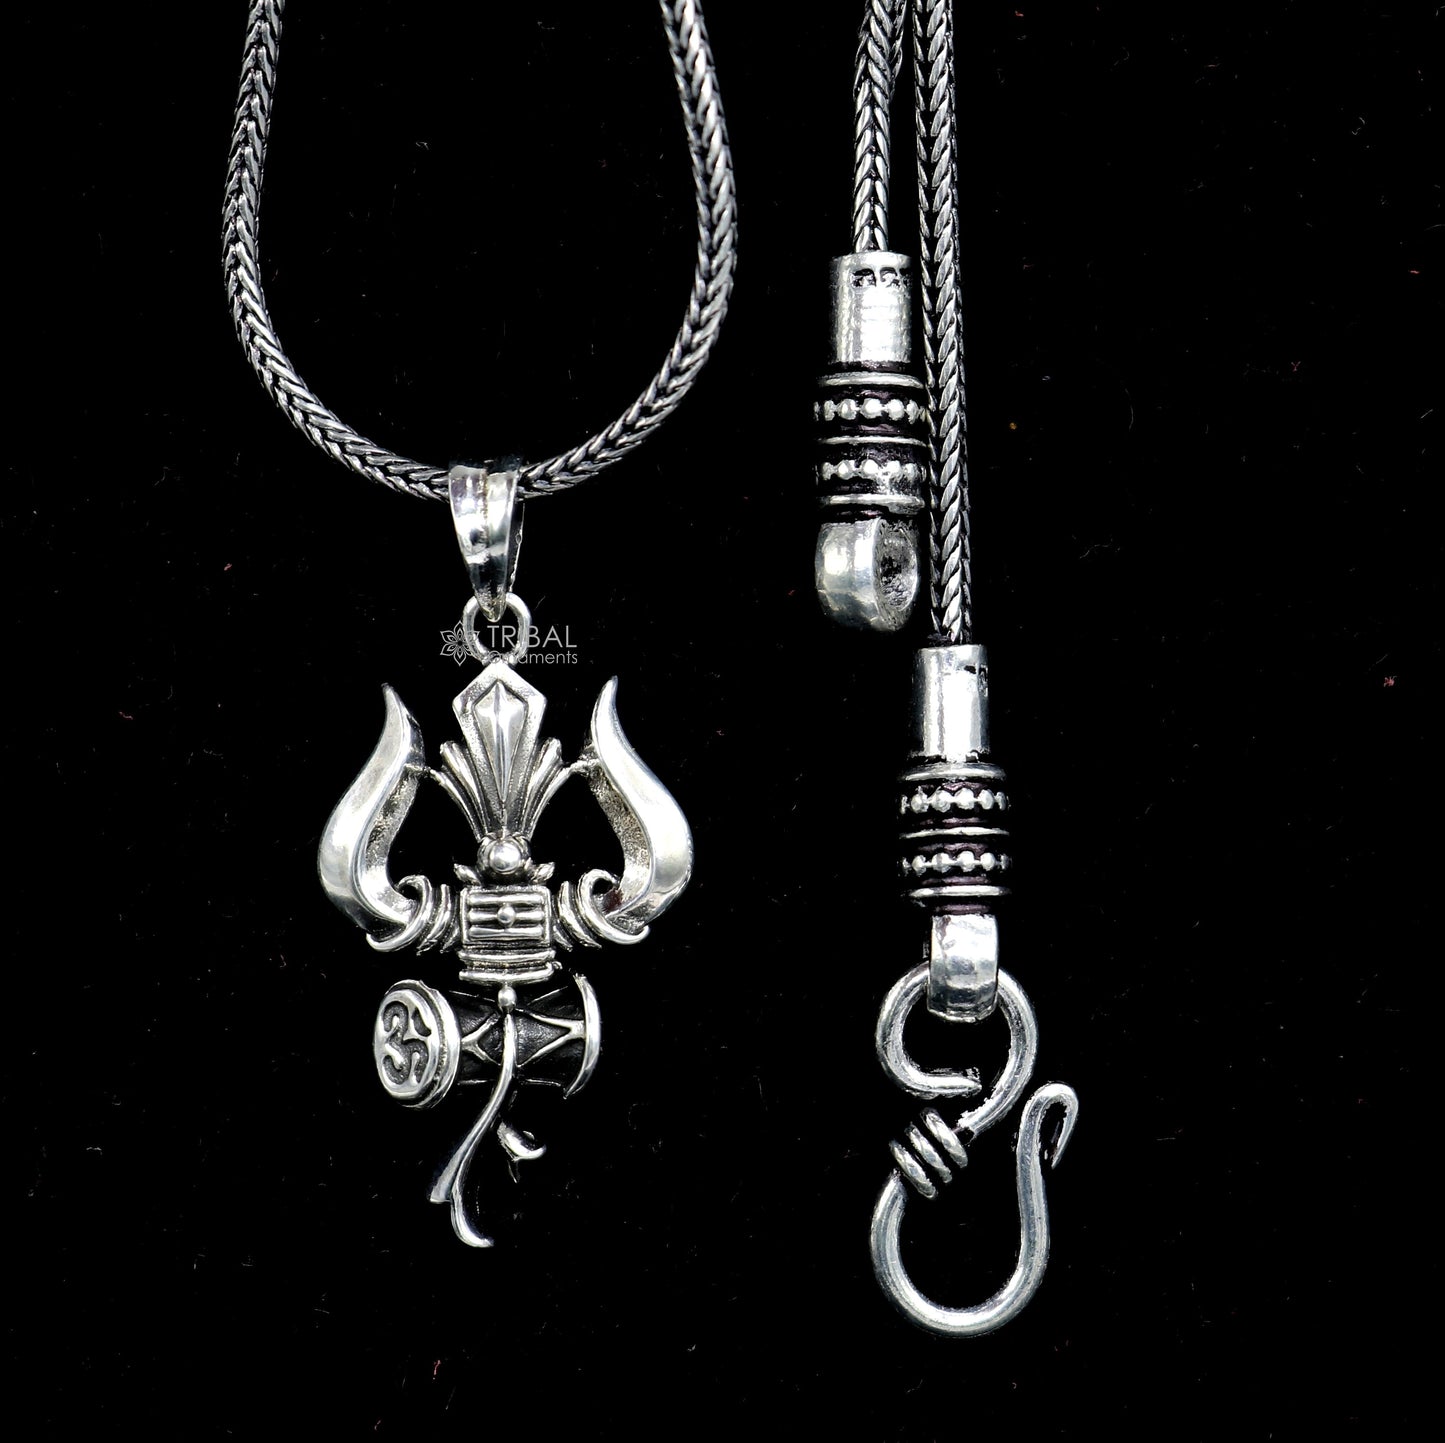 925 sterling silver Hindu idol Lord Shiva trident pendant, amazing vintage design gifting pendant customized god jewelry nsp787 - TRIBAL ORNAMENTS